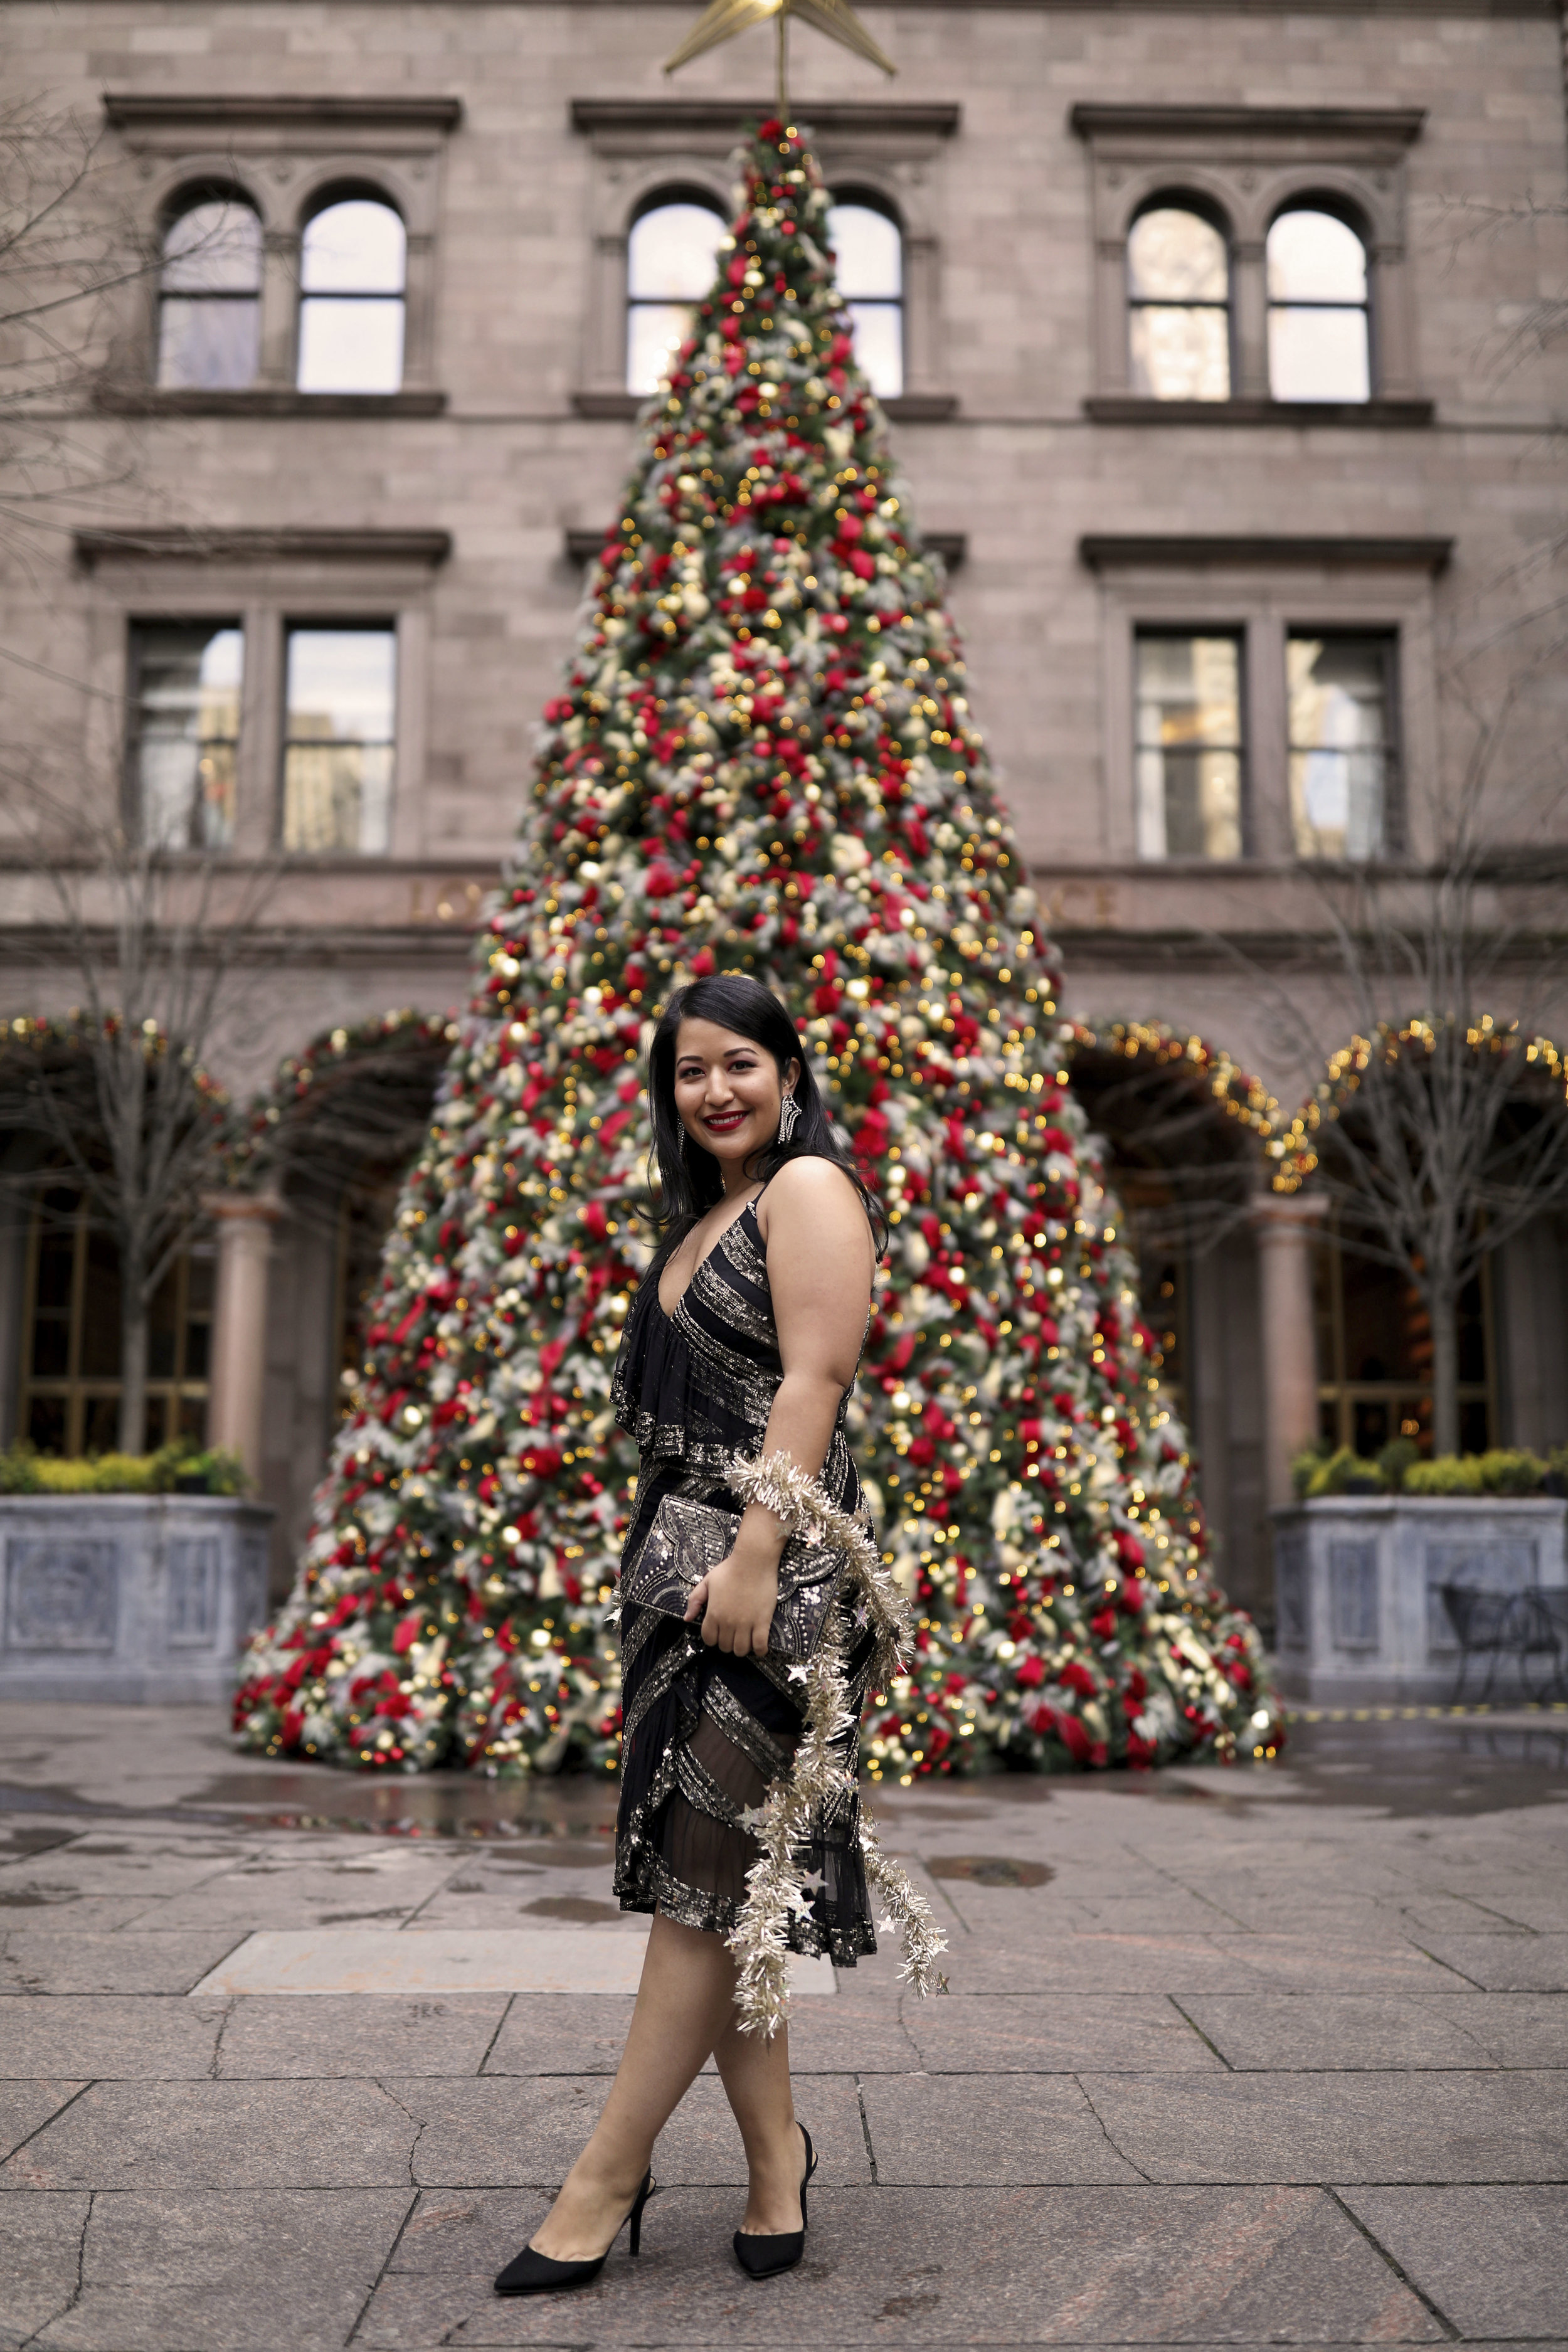 Krity S x Christmas Outfit x Beaded Short Dress2.jpg